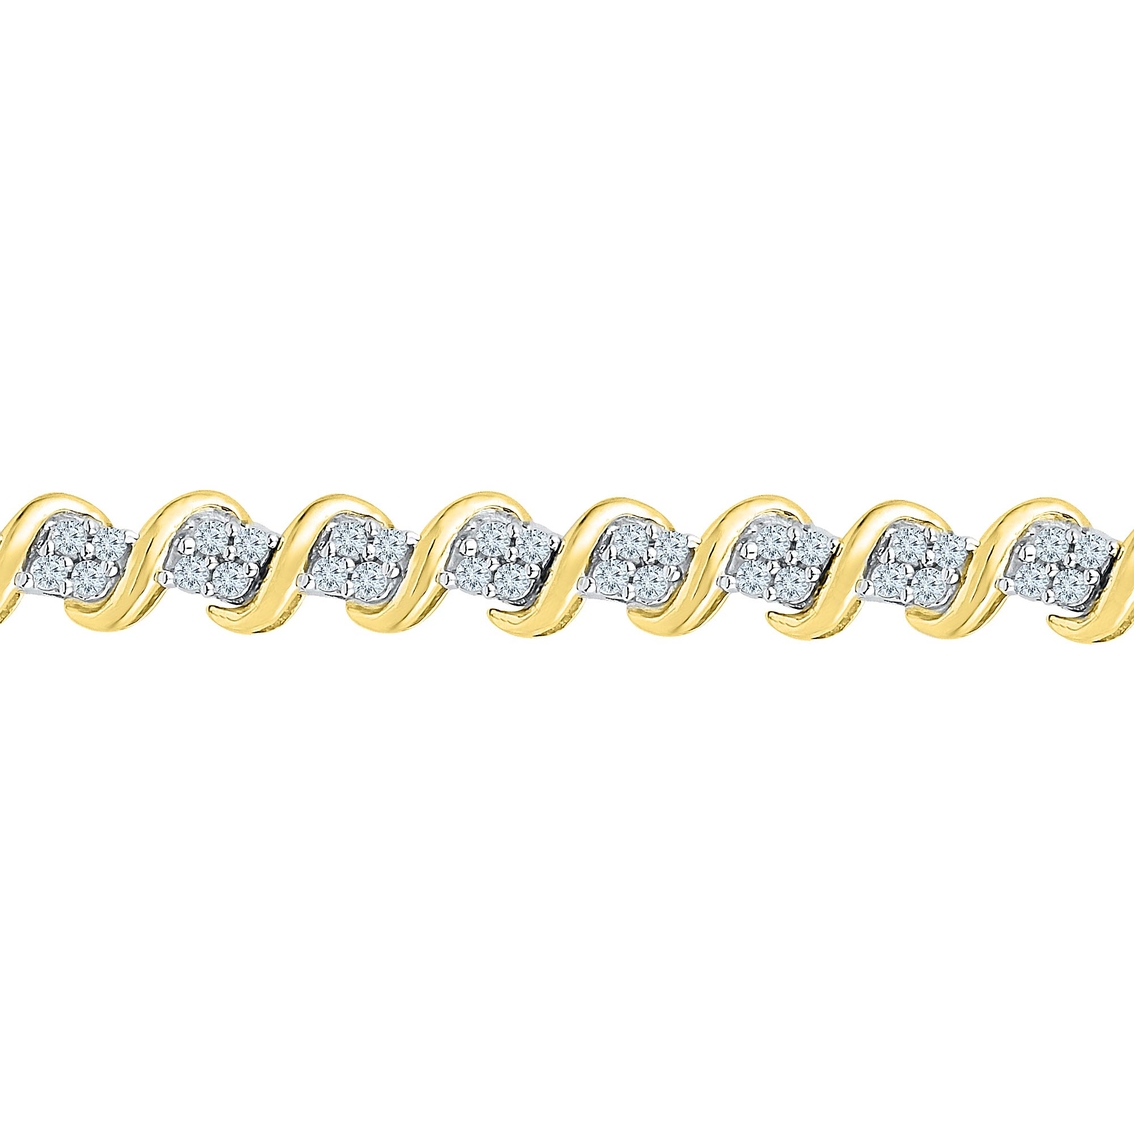 10K Yellow Gold 1 CTW Diamond Bracelet - Image 2 of 2